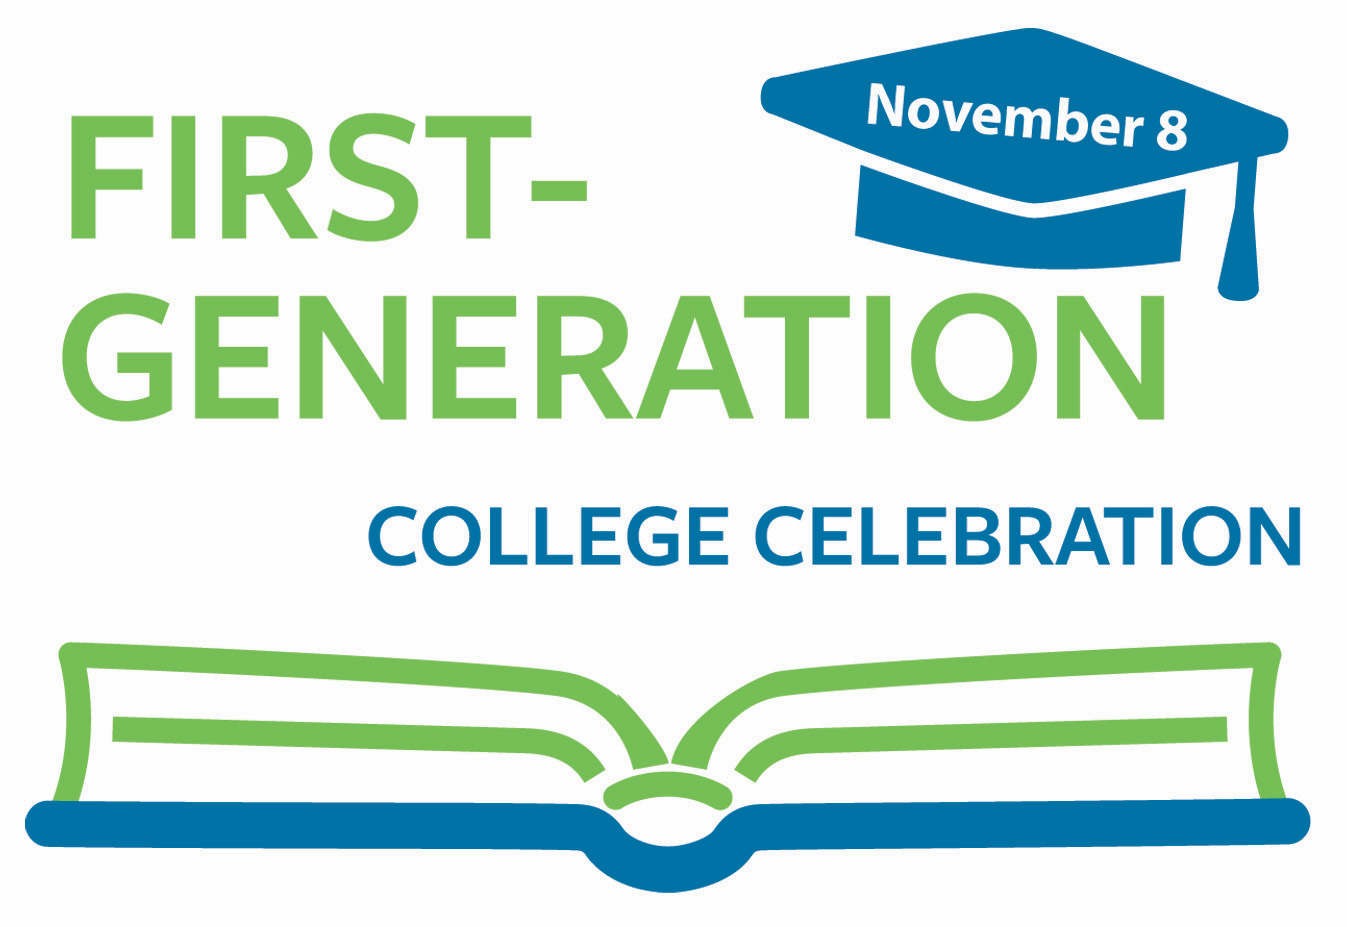 irst-Generation College Celebration